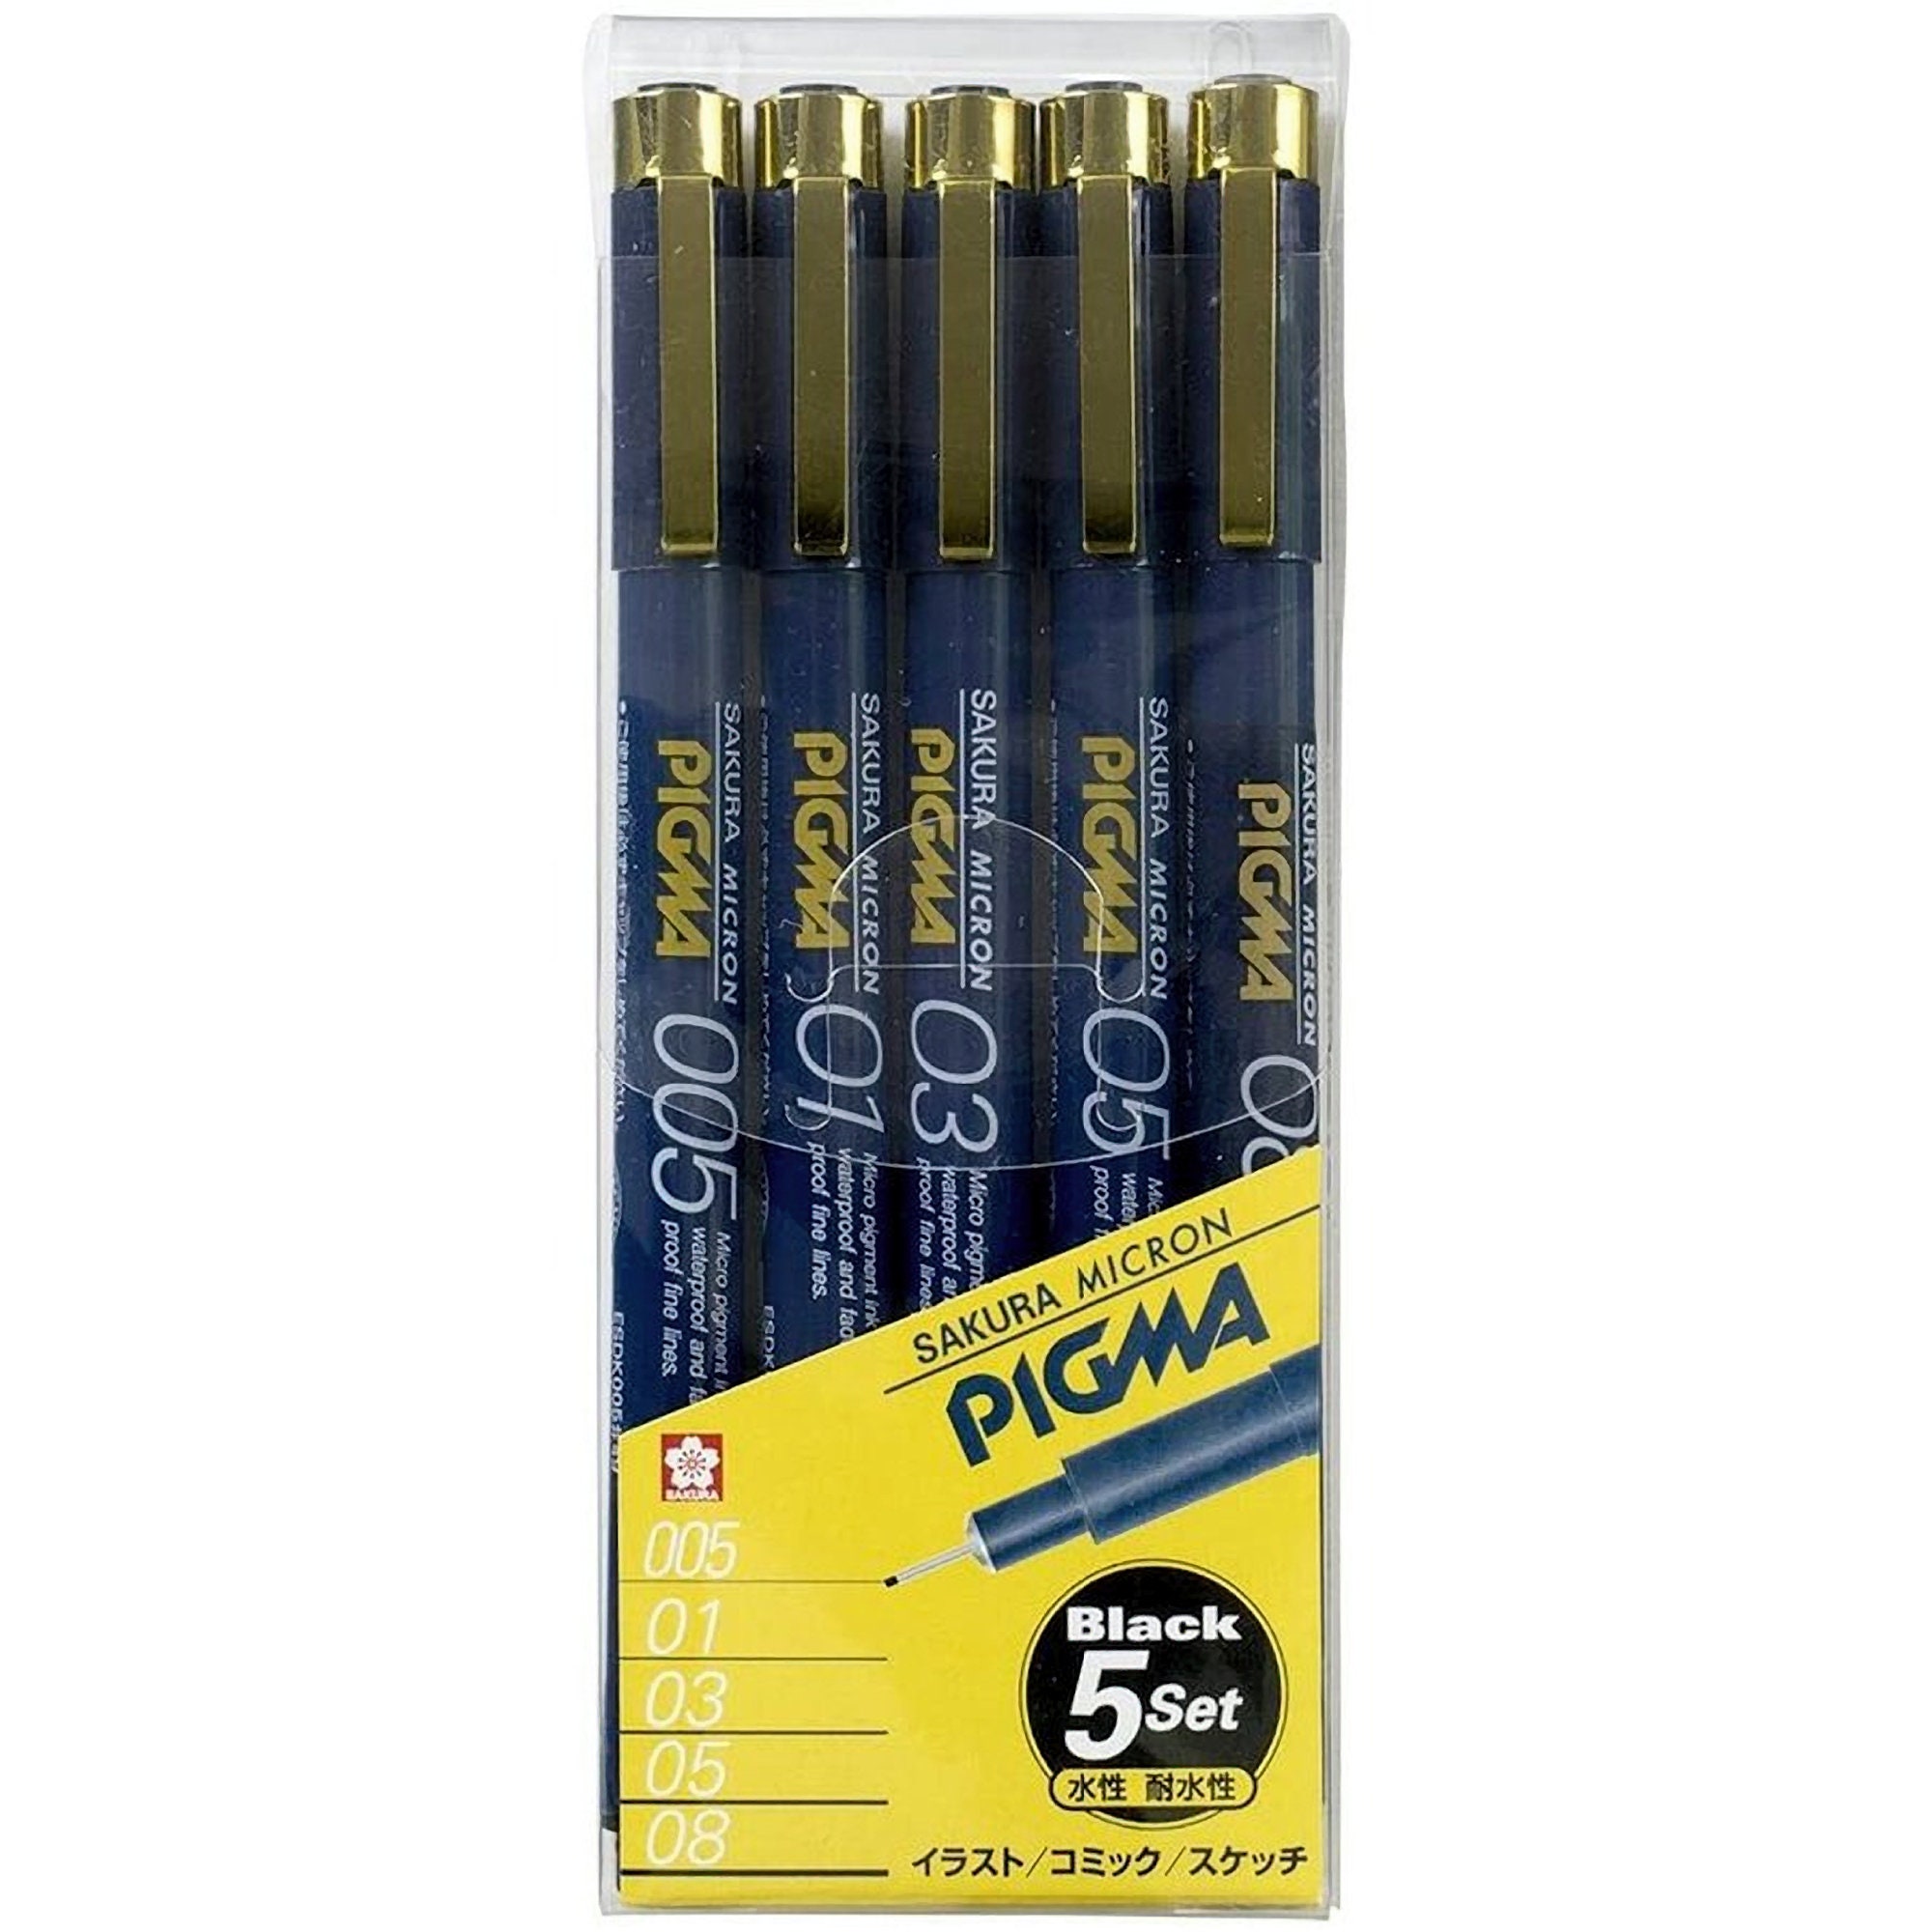 Sakura Pigma Micron SEPIA Pen 003 Size 0.15mm Waterproof Pen Archival Pen  Fade Resistant Pen Ph Neutral Pen ESDK003-117 japan Import 